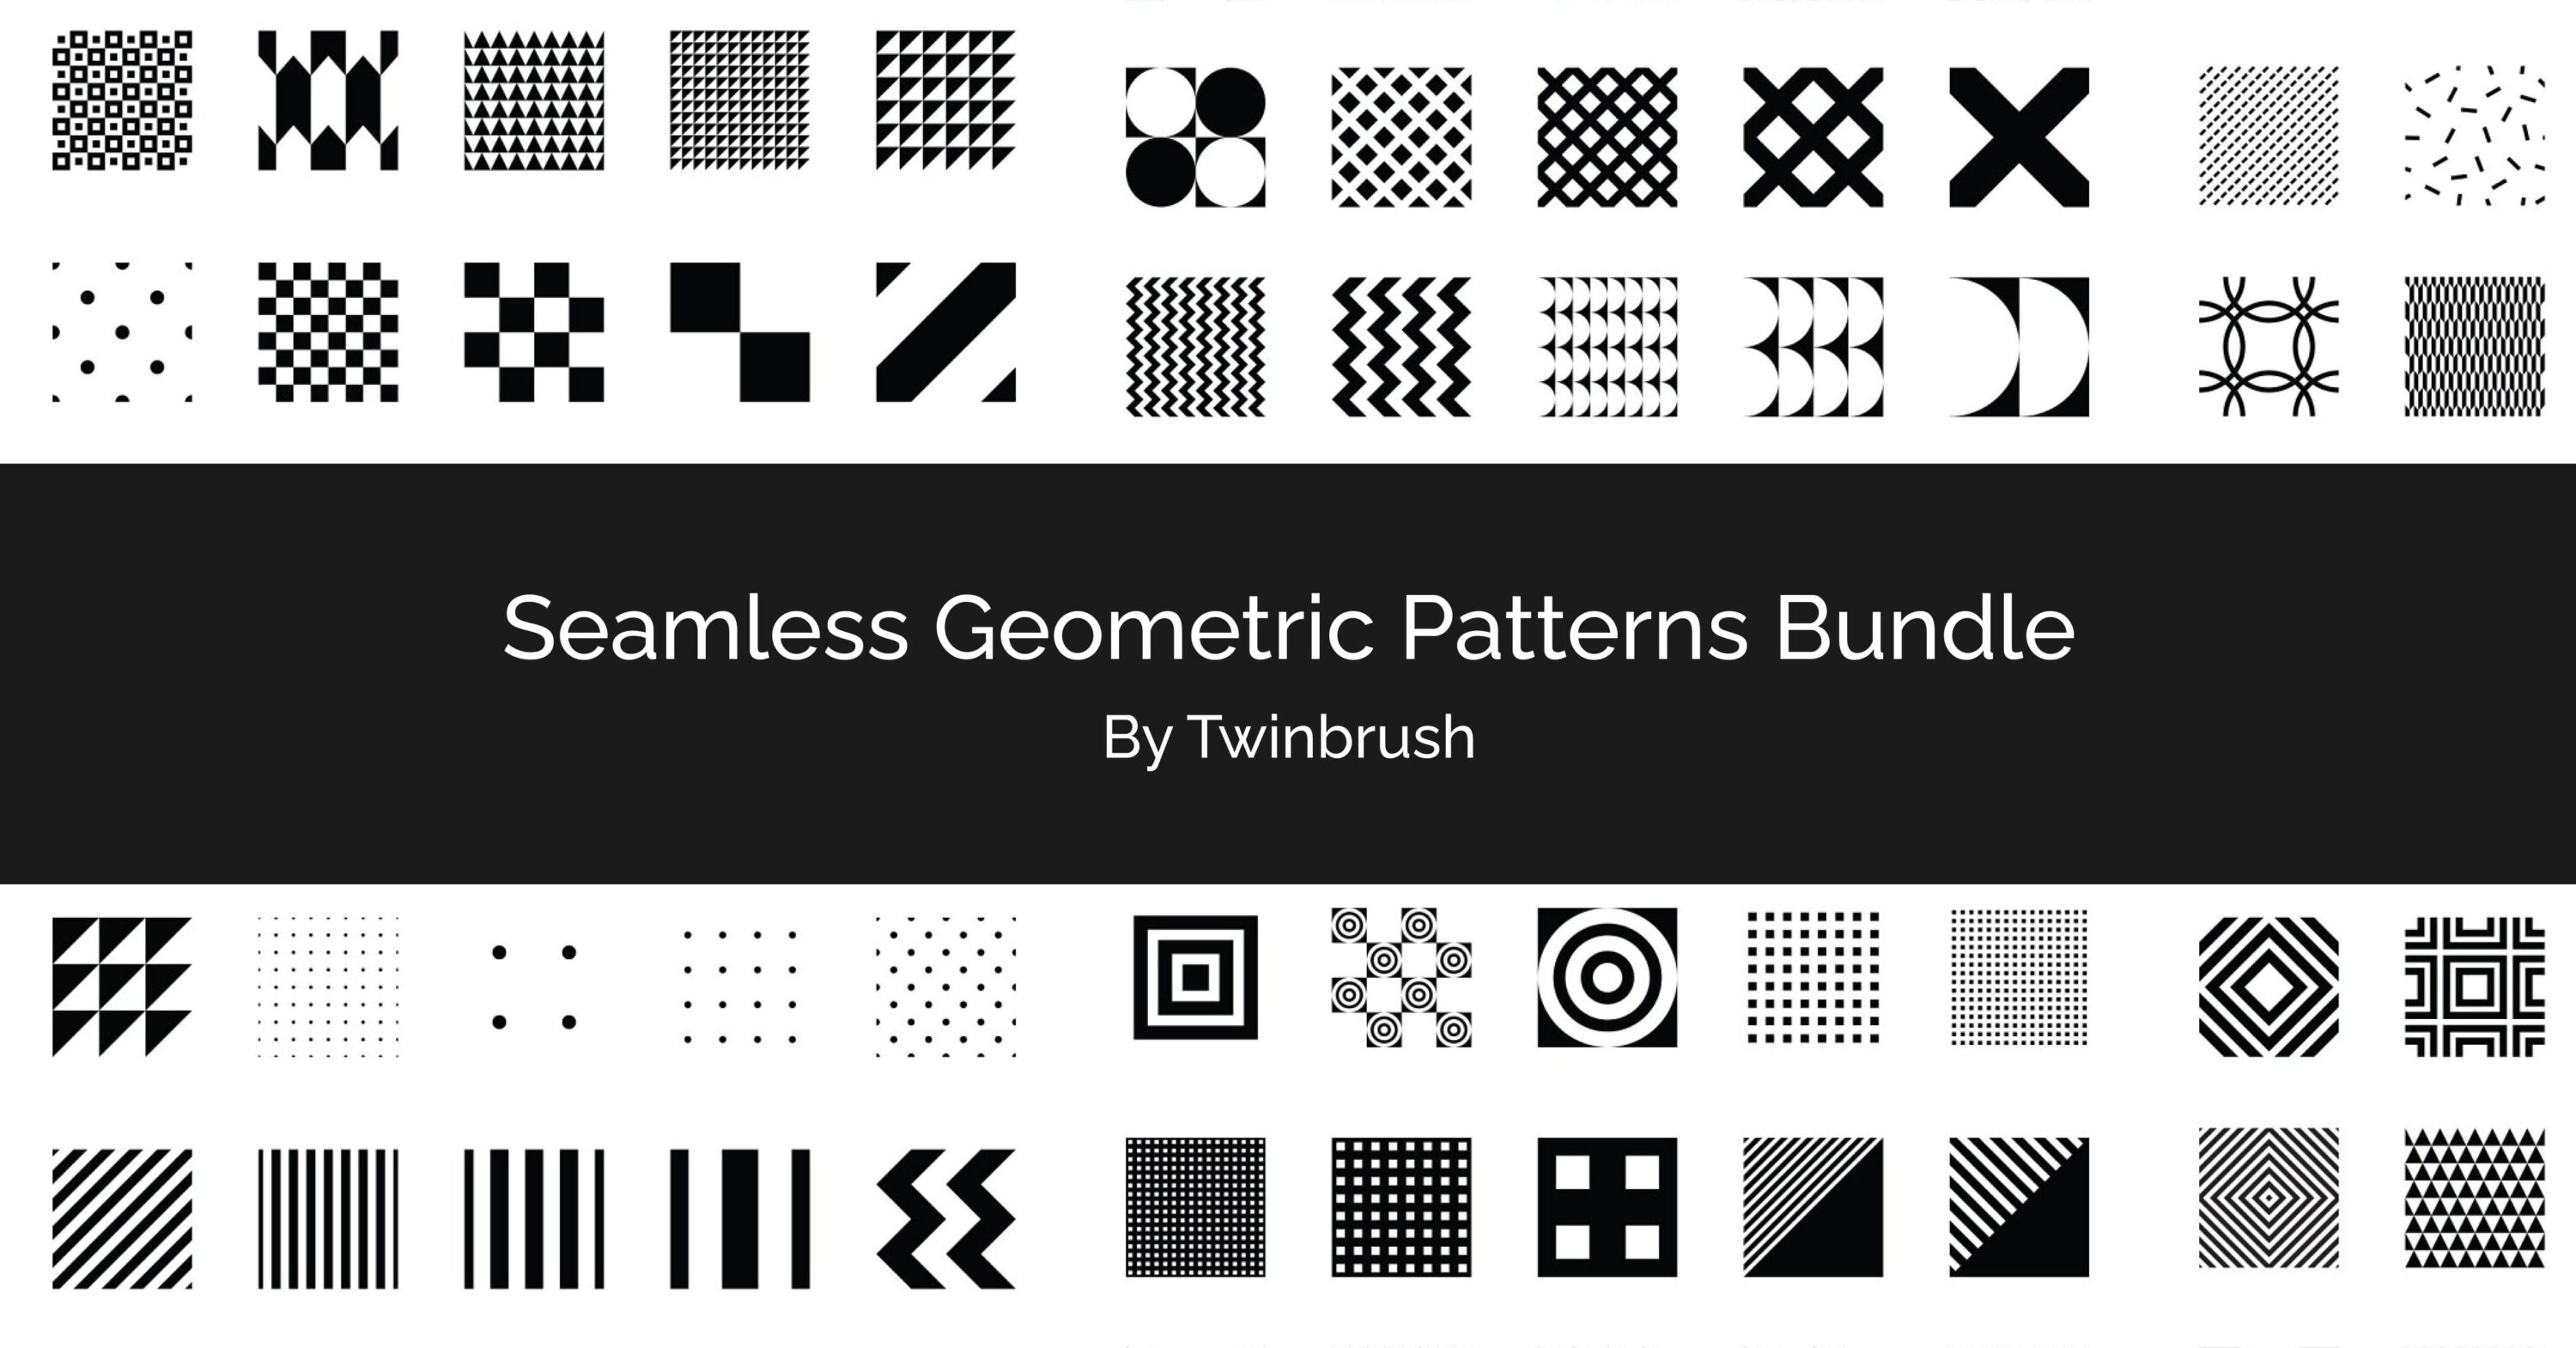 Seamless Geometric Patterns Bundle facebook image.